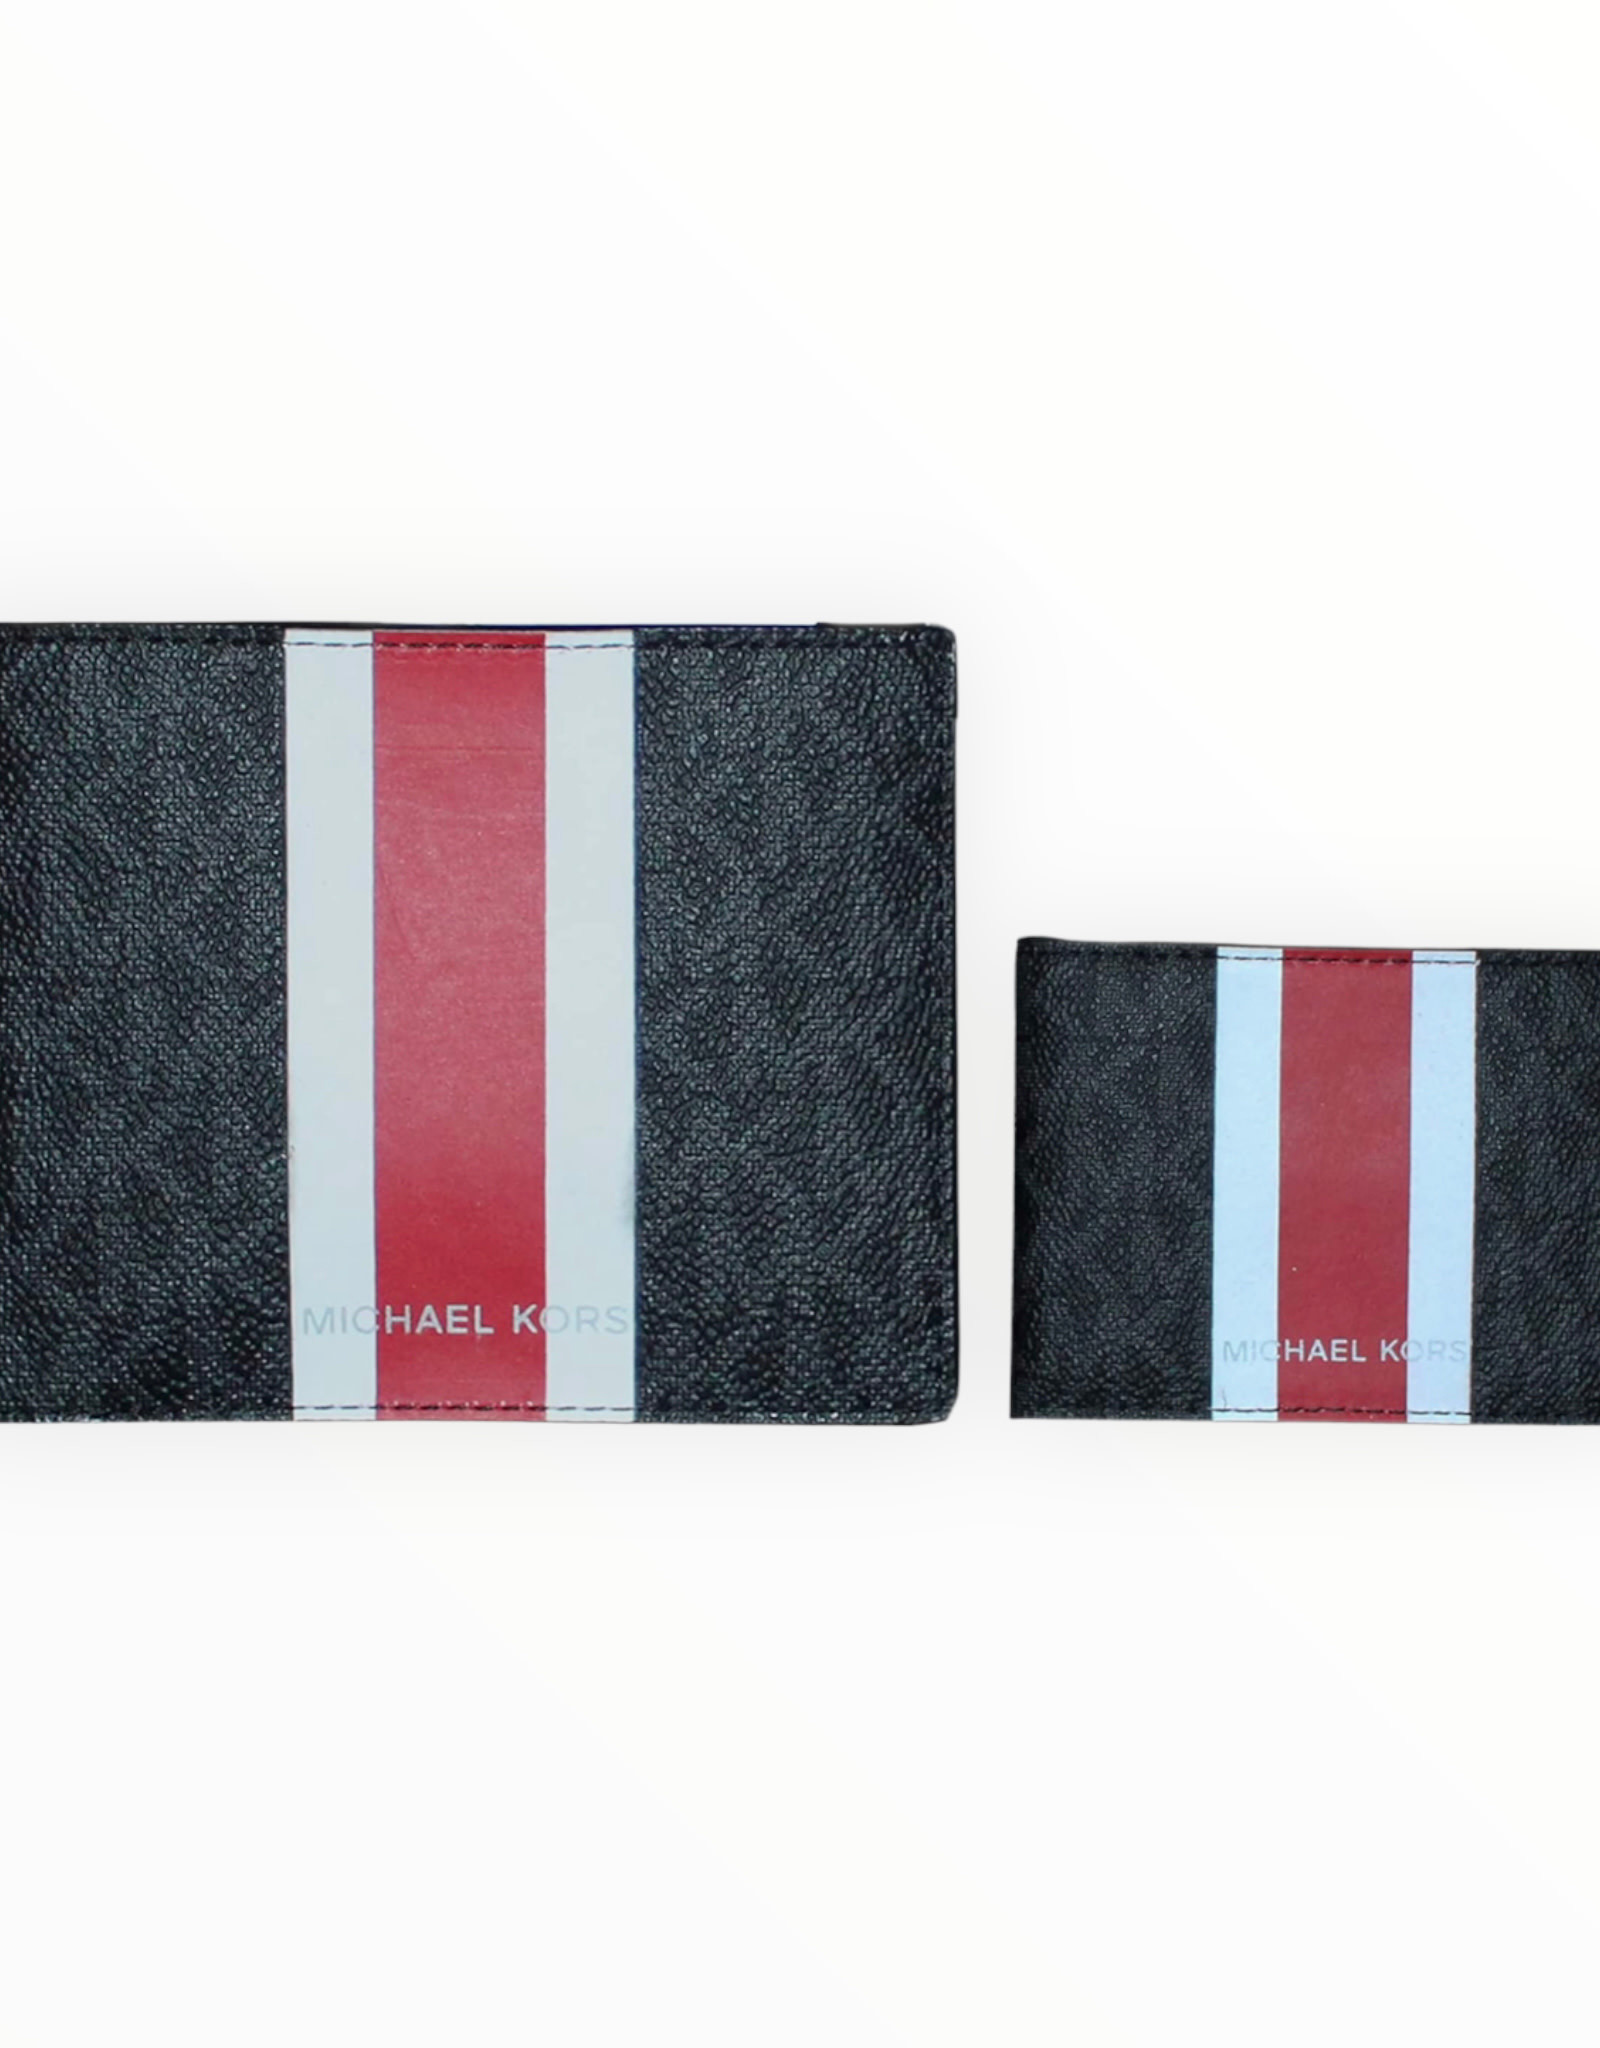 Michael Kors Michael Kors 3 in 1 Wallet Box Set Removable Passcase, 2 card slots, 1 ID window & 1 side slip